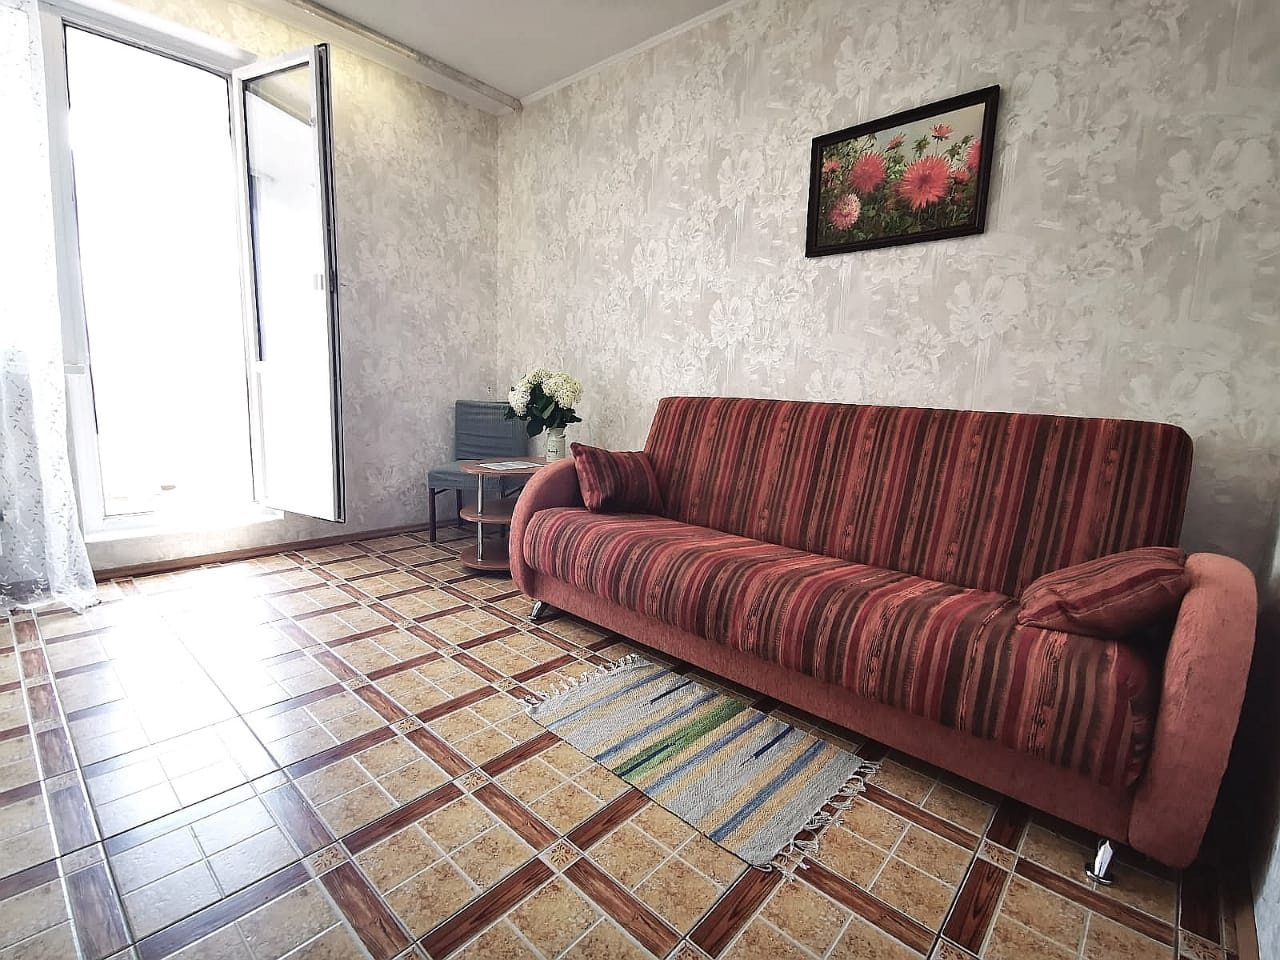 Снять квартиру в красногорске без мебели недорого